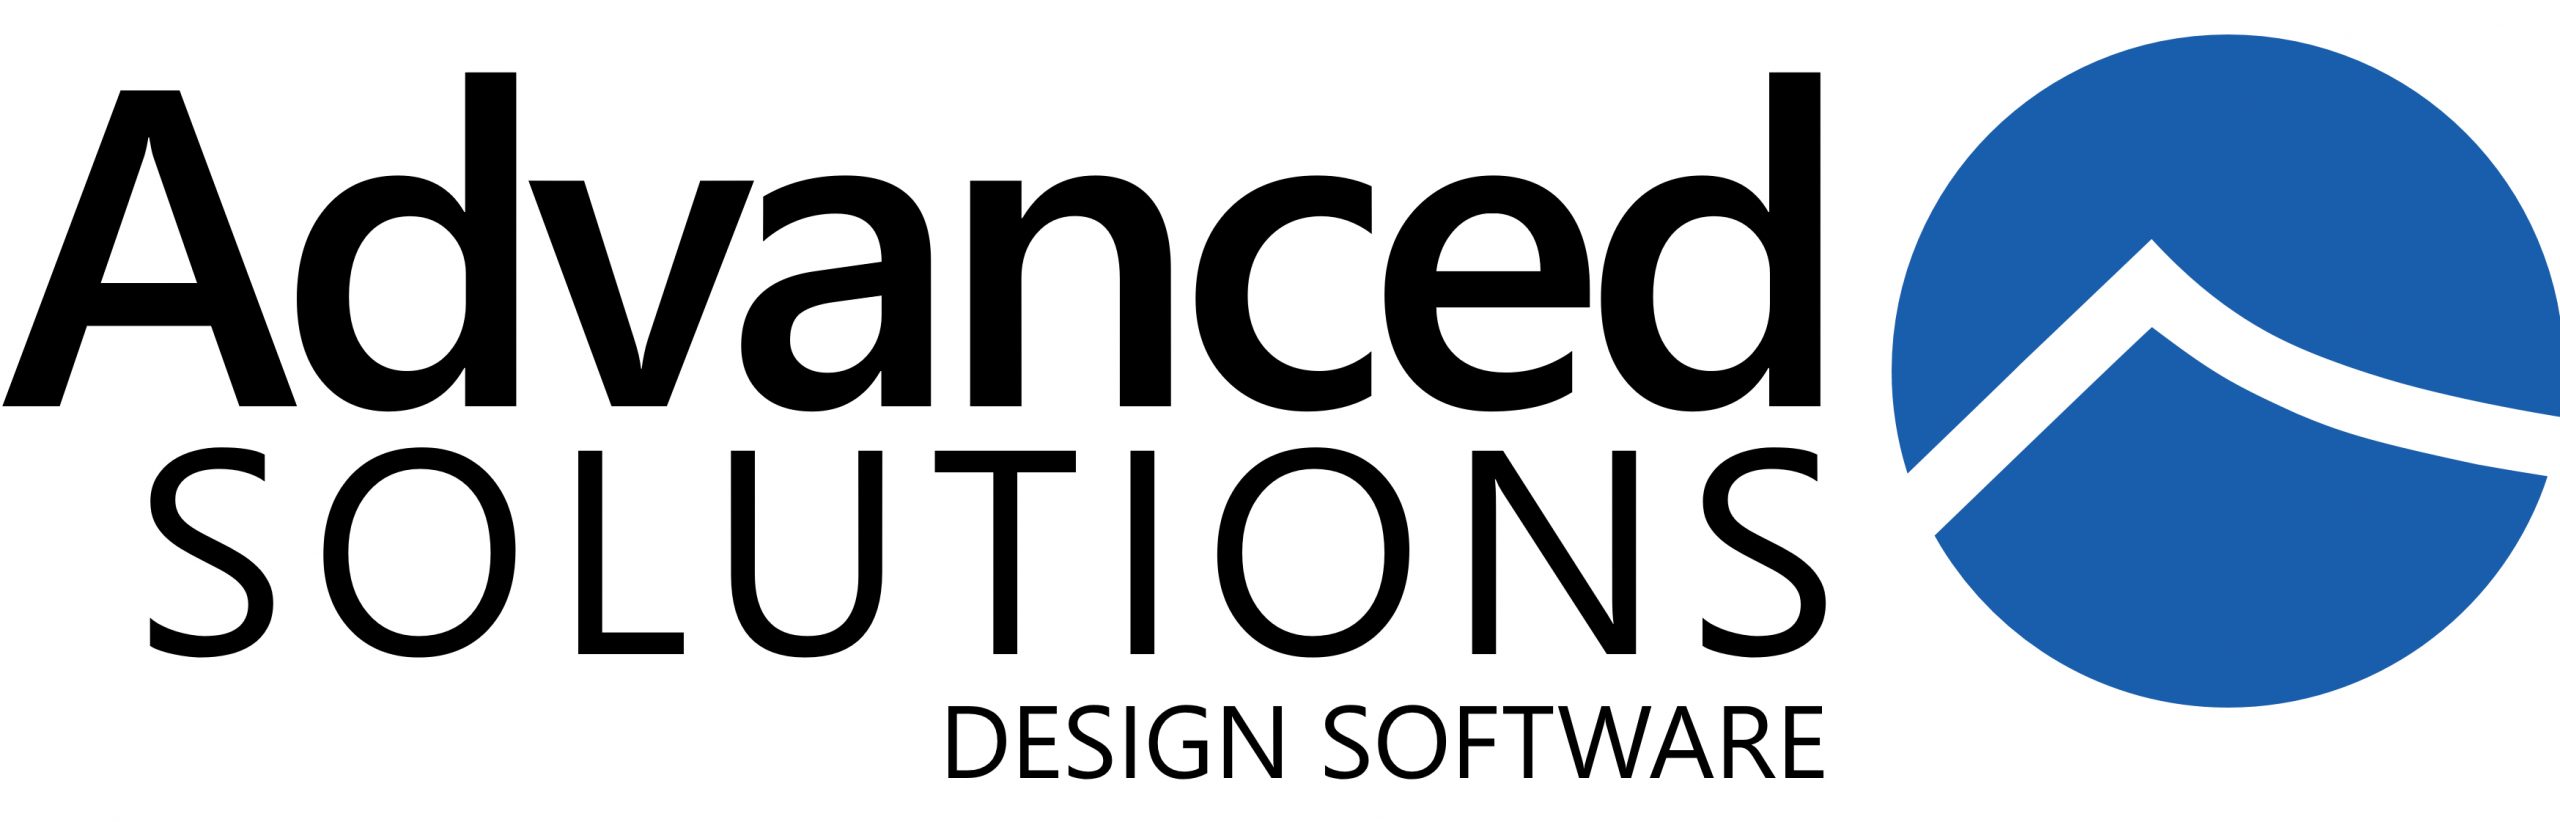 Advanced Solutions Design Software logo.